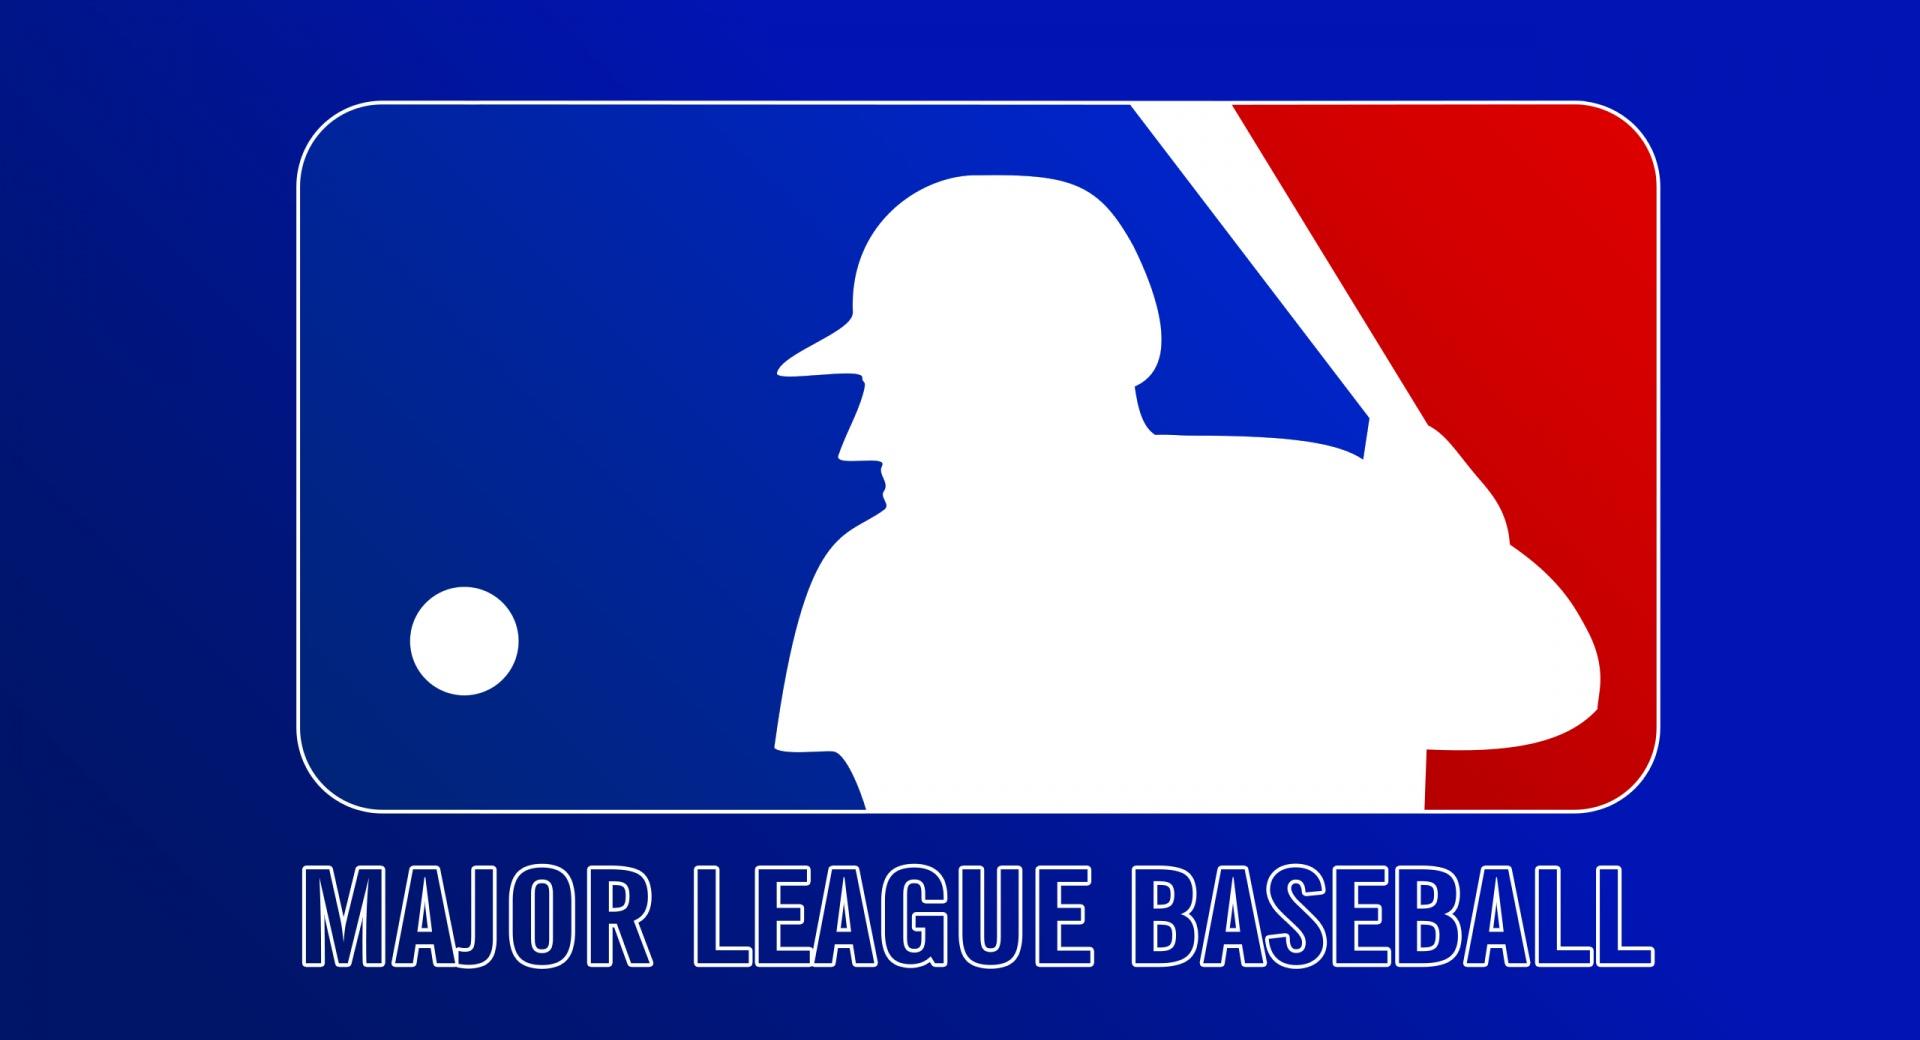 Major League Baseball (MLB) at 1600 x 1200 size wallpapers HD quality